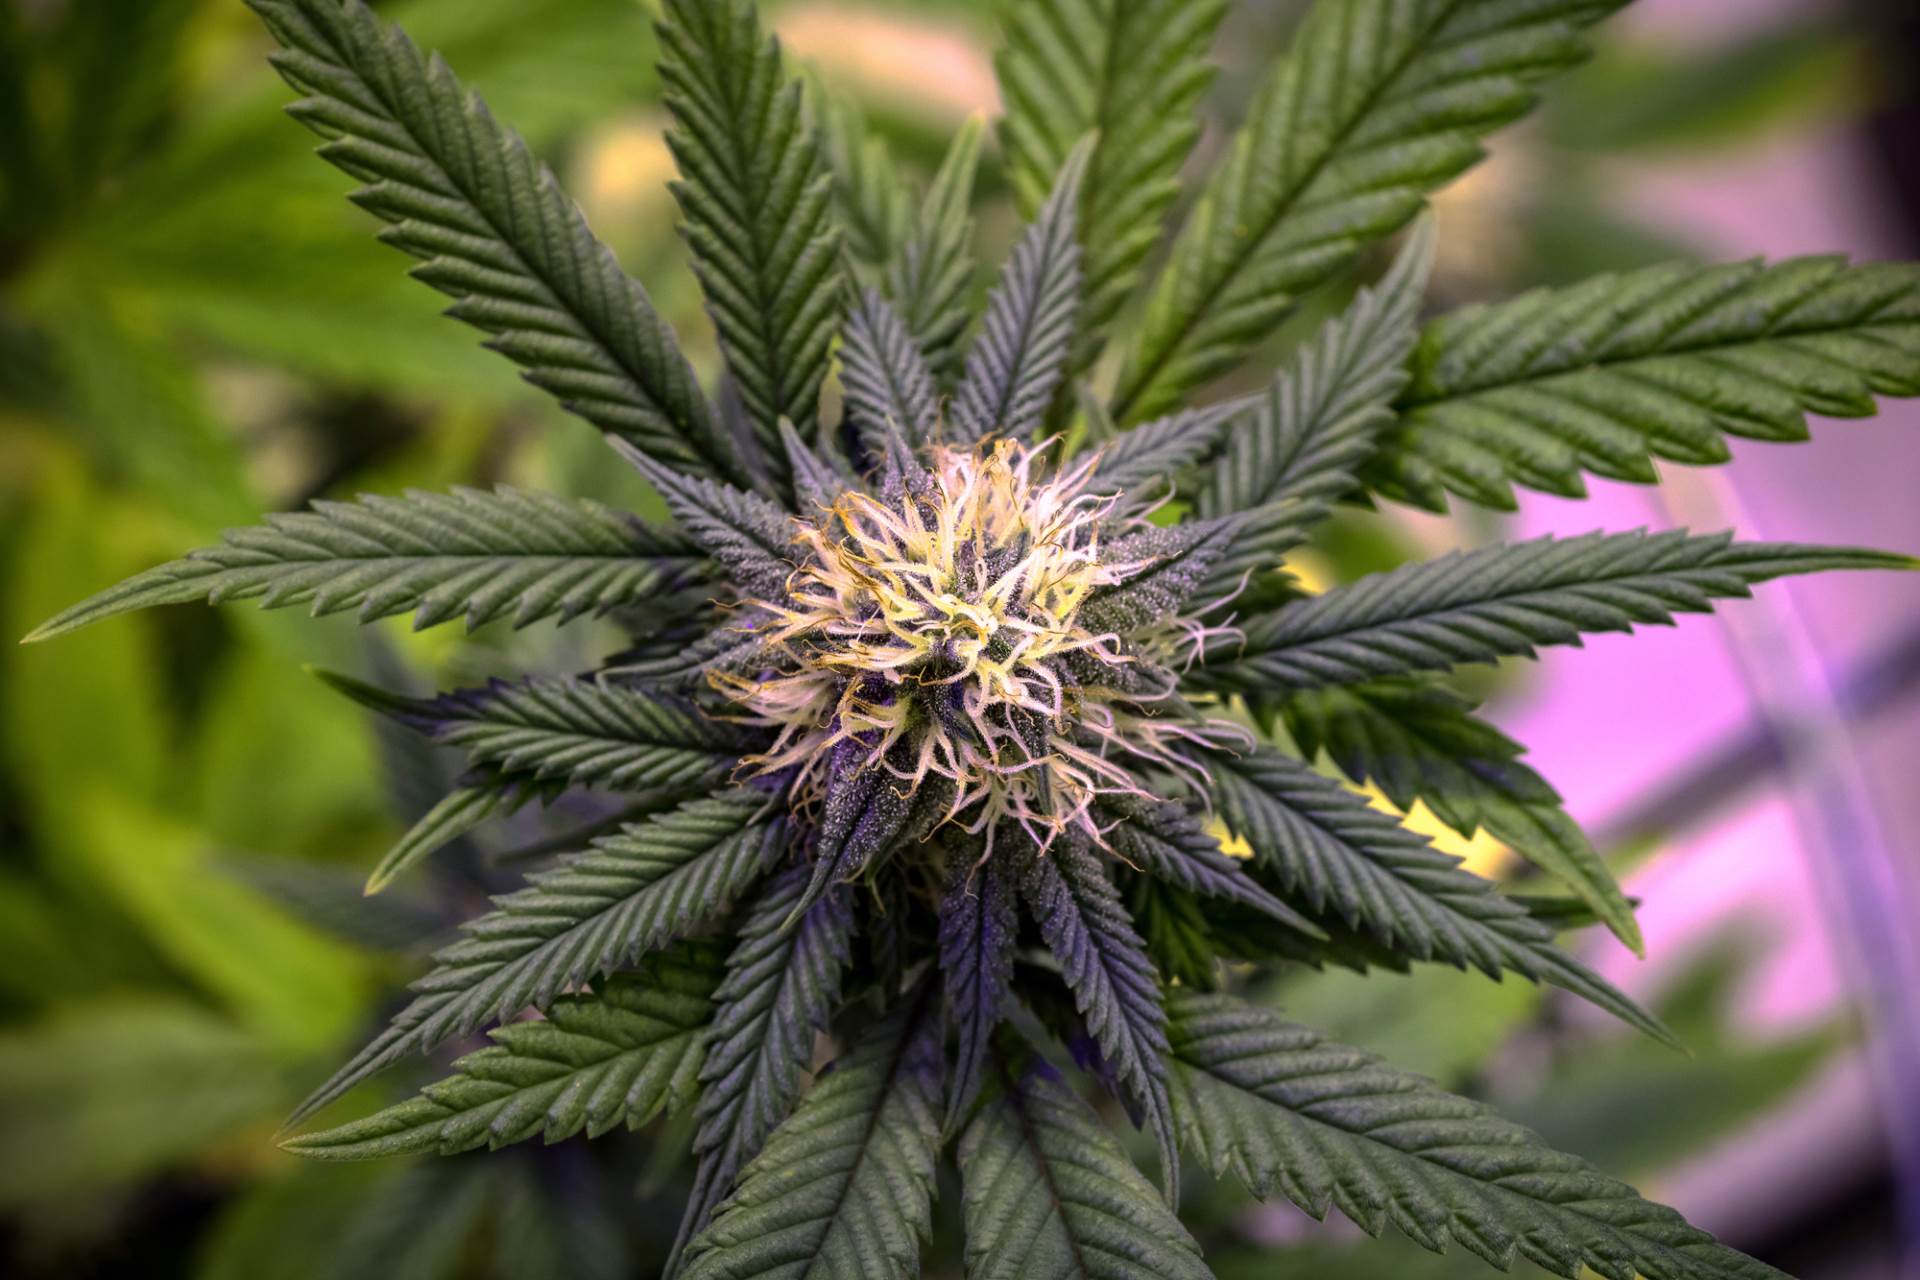  Kod Foče zaplijenjeno 64 kilograma marihuane 